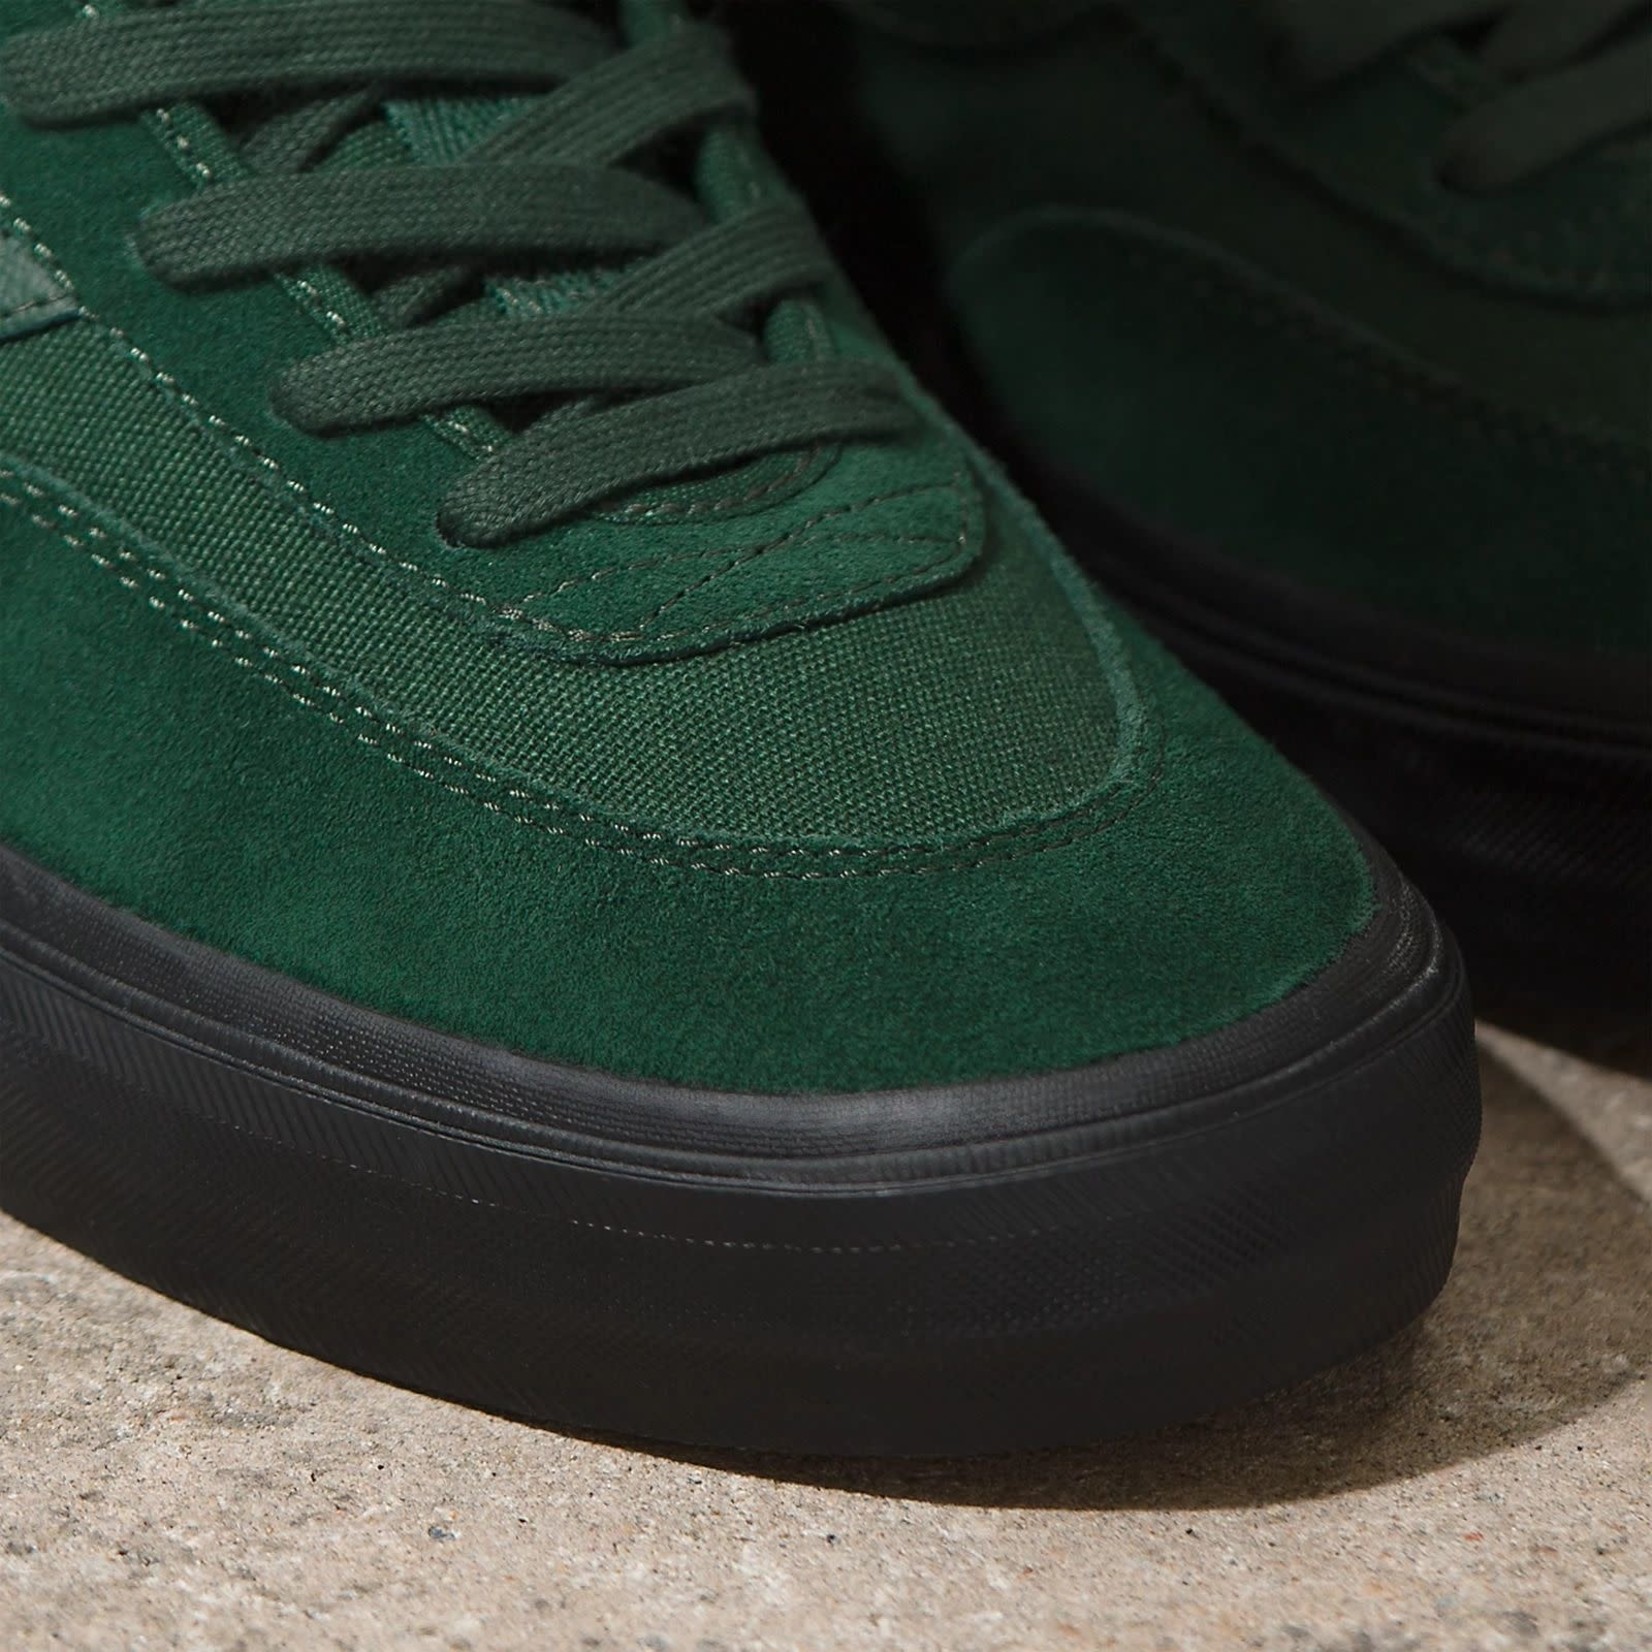 Vans Vans Crockett High Shoe - Dark Green/Black